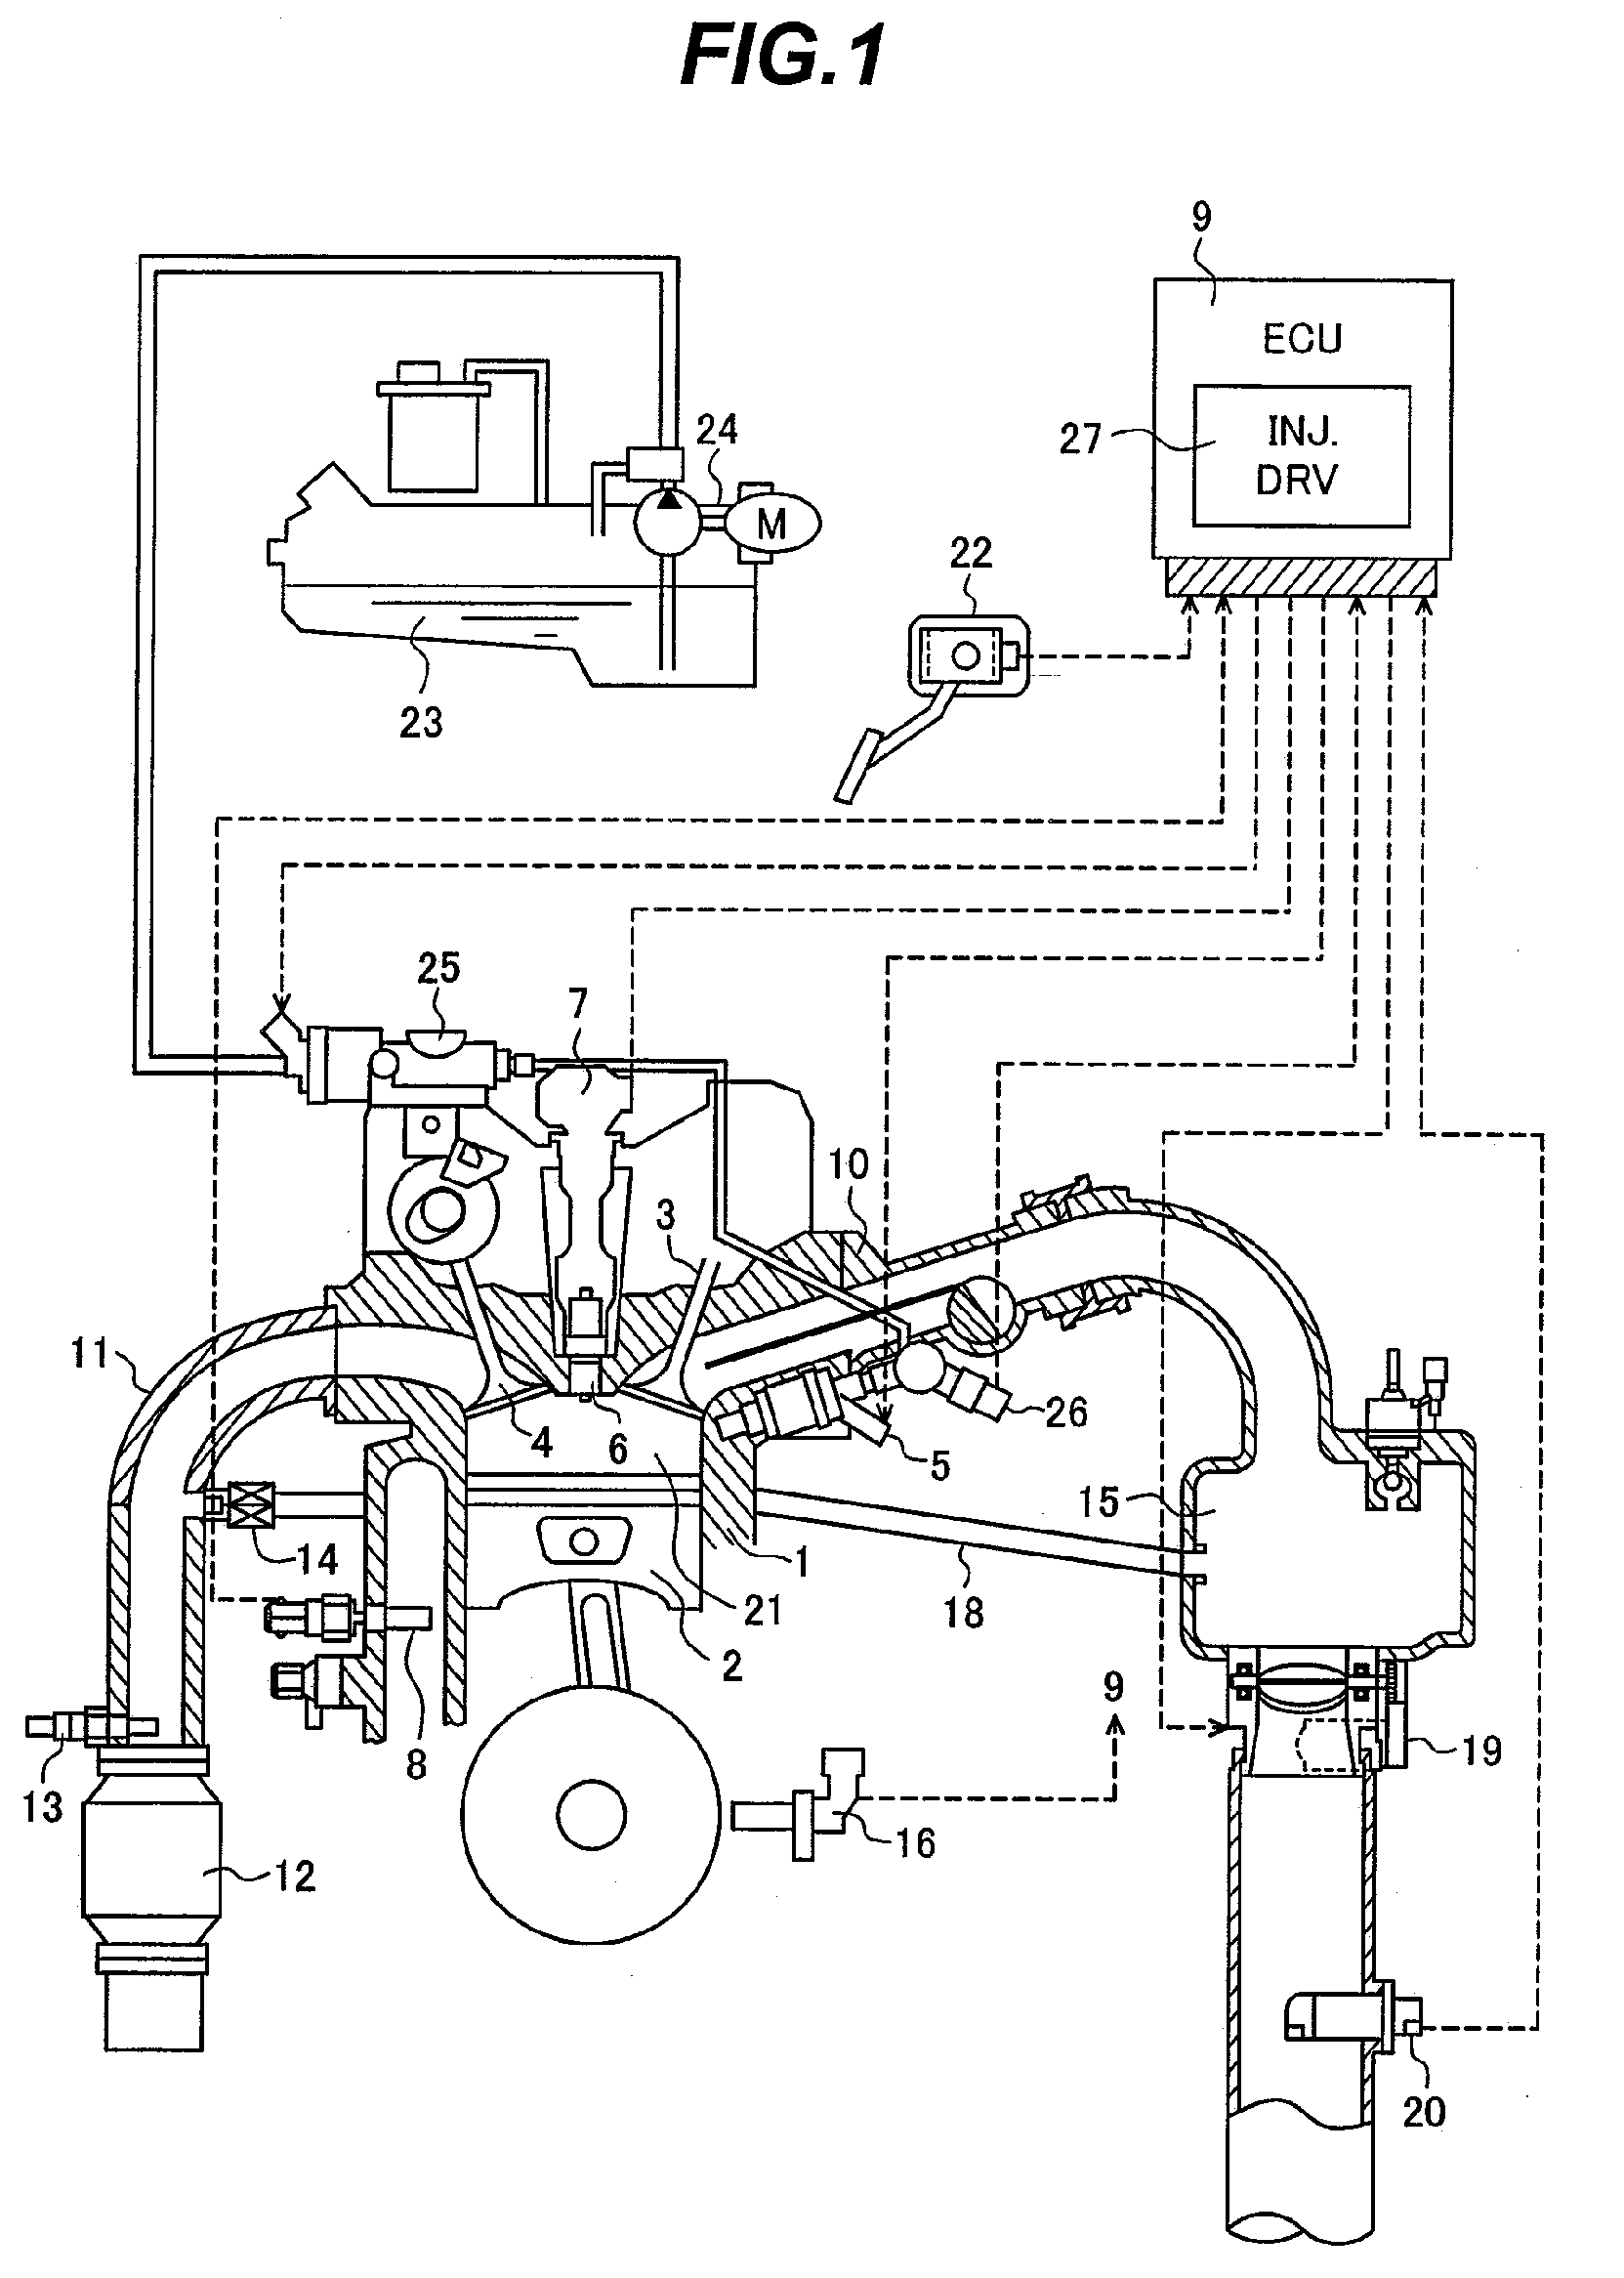 Fuel injection control apparatus